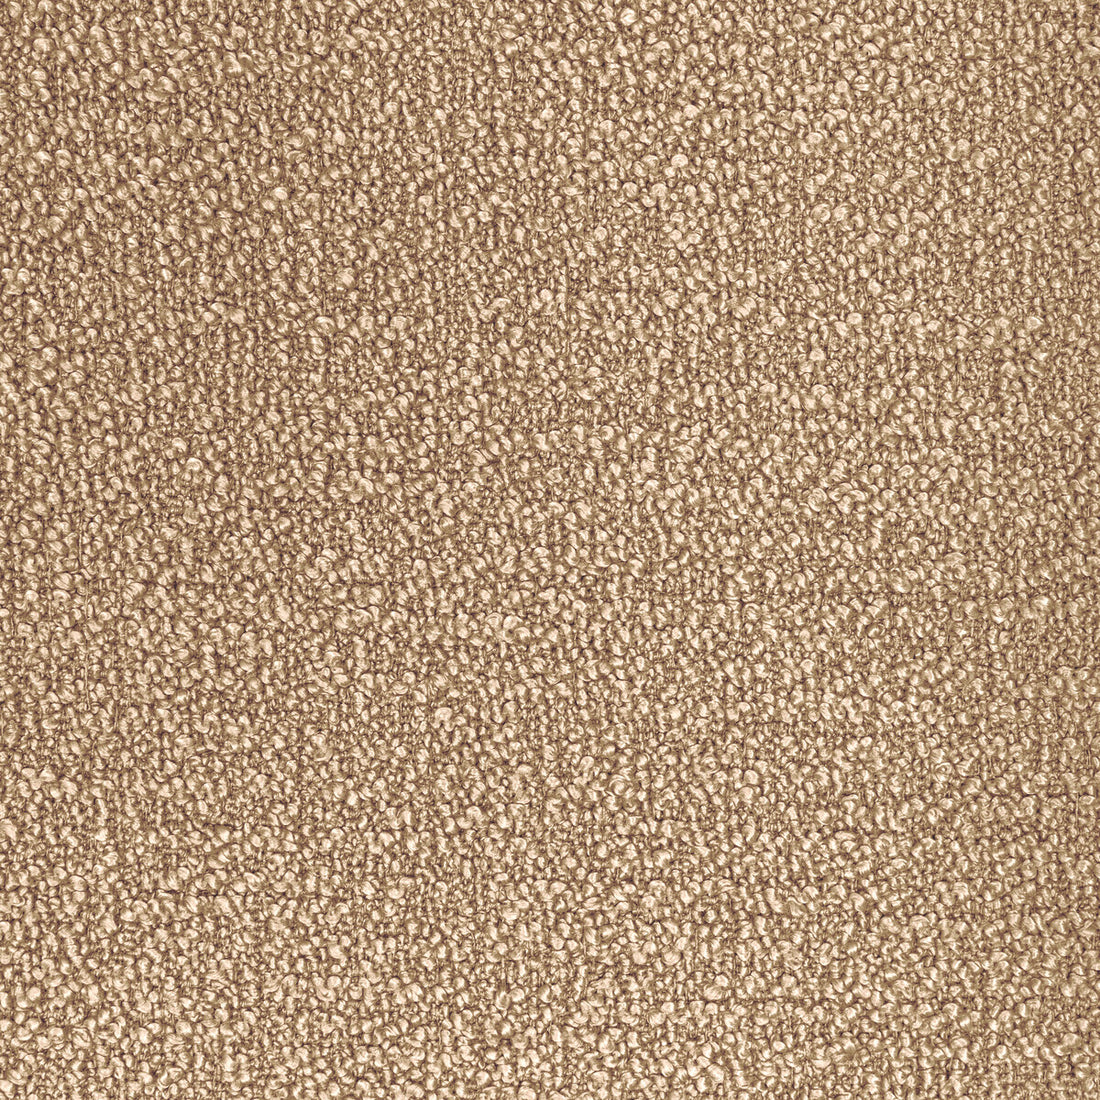 Kravet Smart fabric in 36857-1611 color - pattern 36857.1611.0 - by Kravet Smart in the Performance Kravetarmor collection